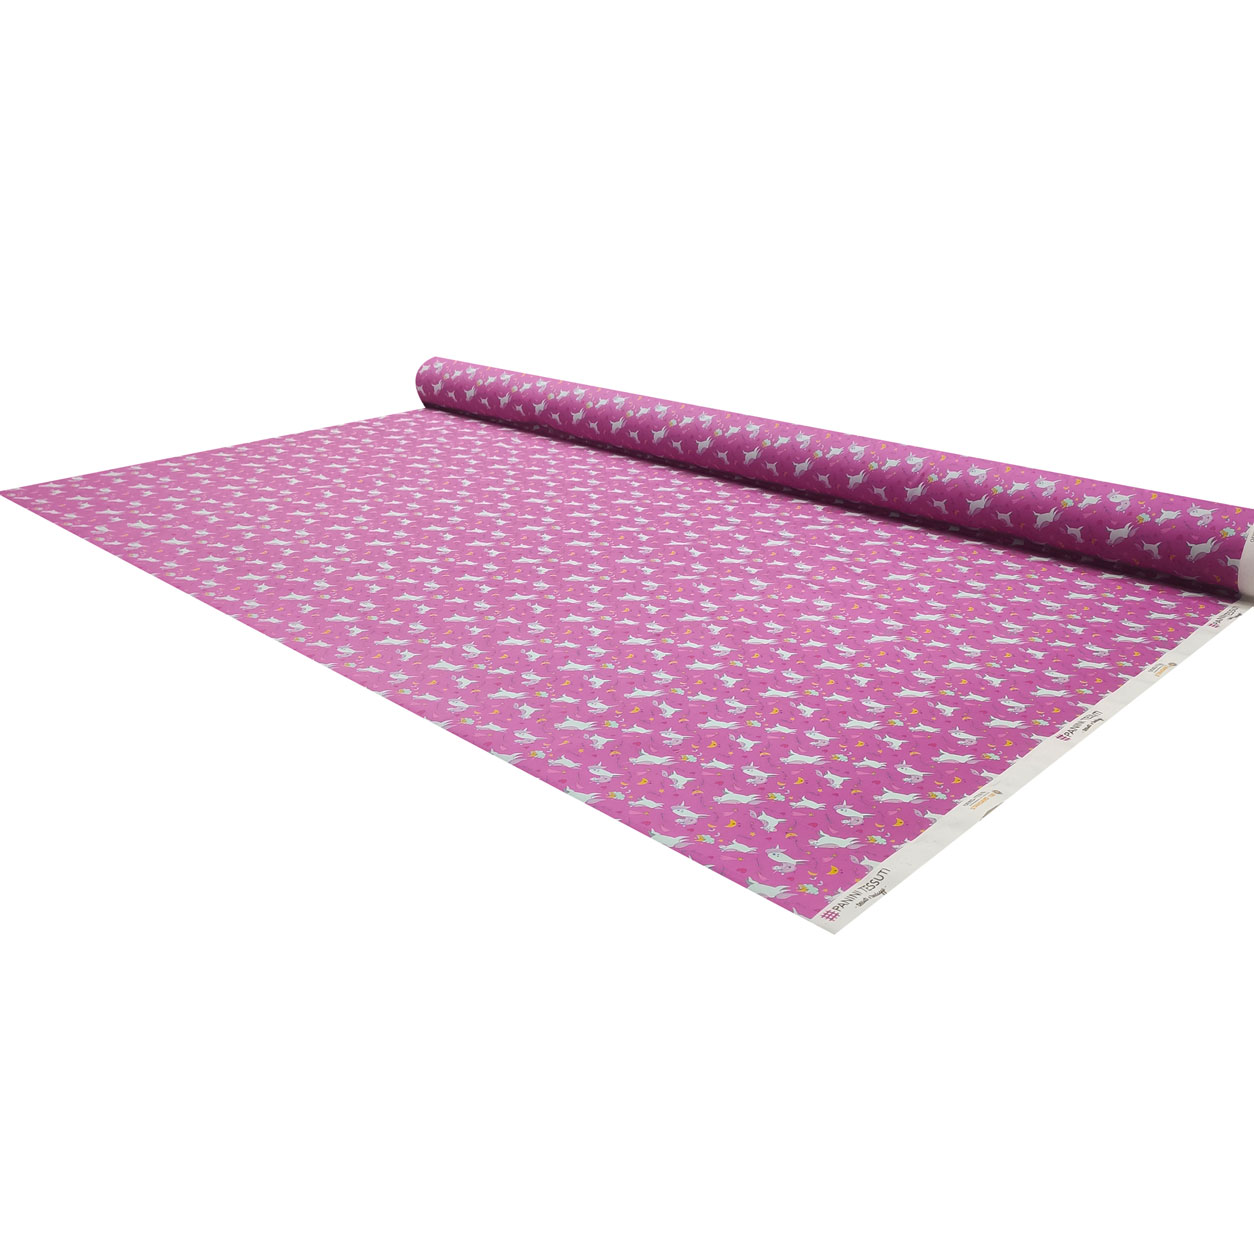 cotone-tessuto-unicorni-e-nuvolette-sfondo-rosa-panini-tessuti